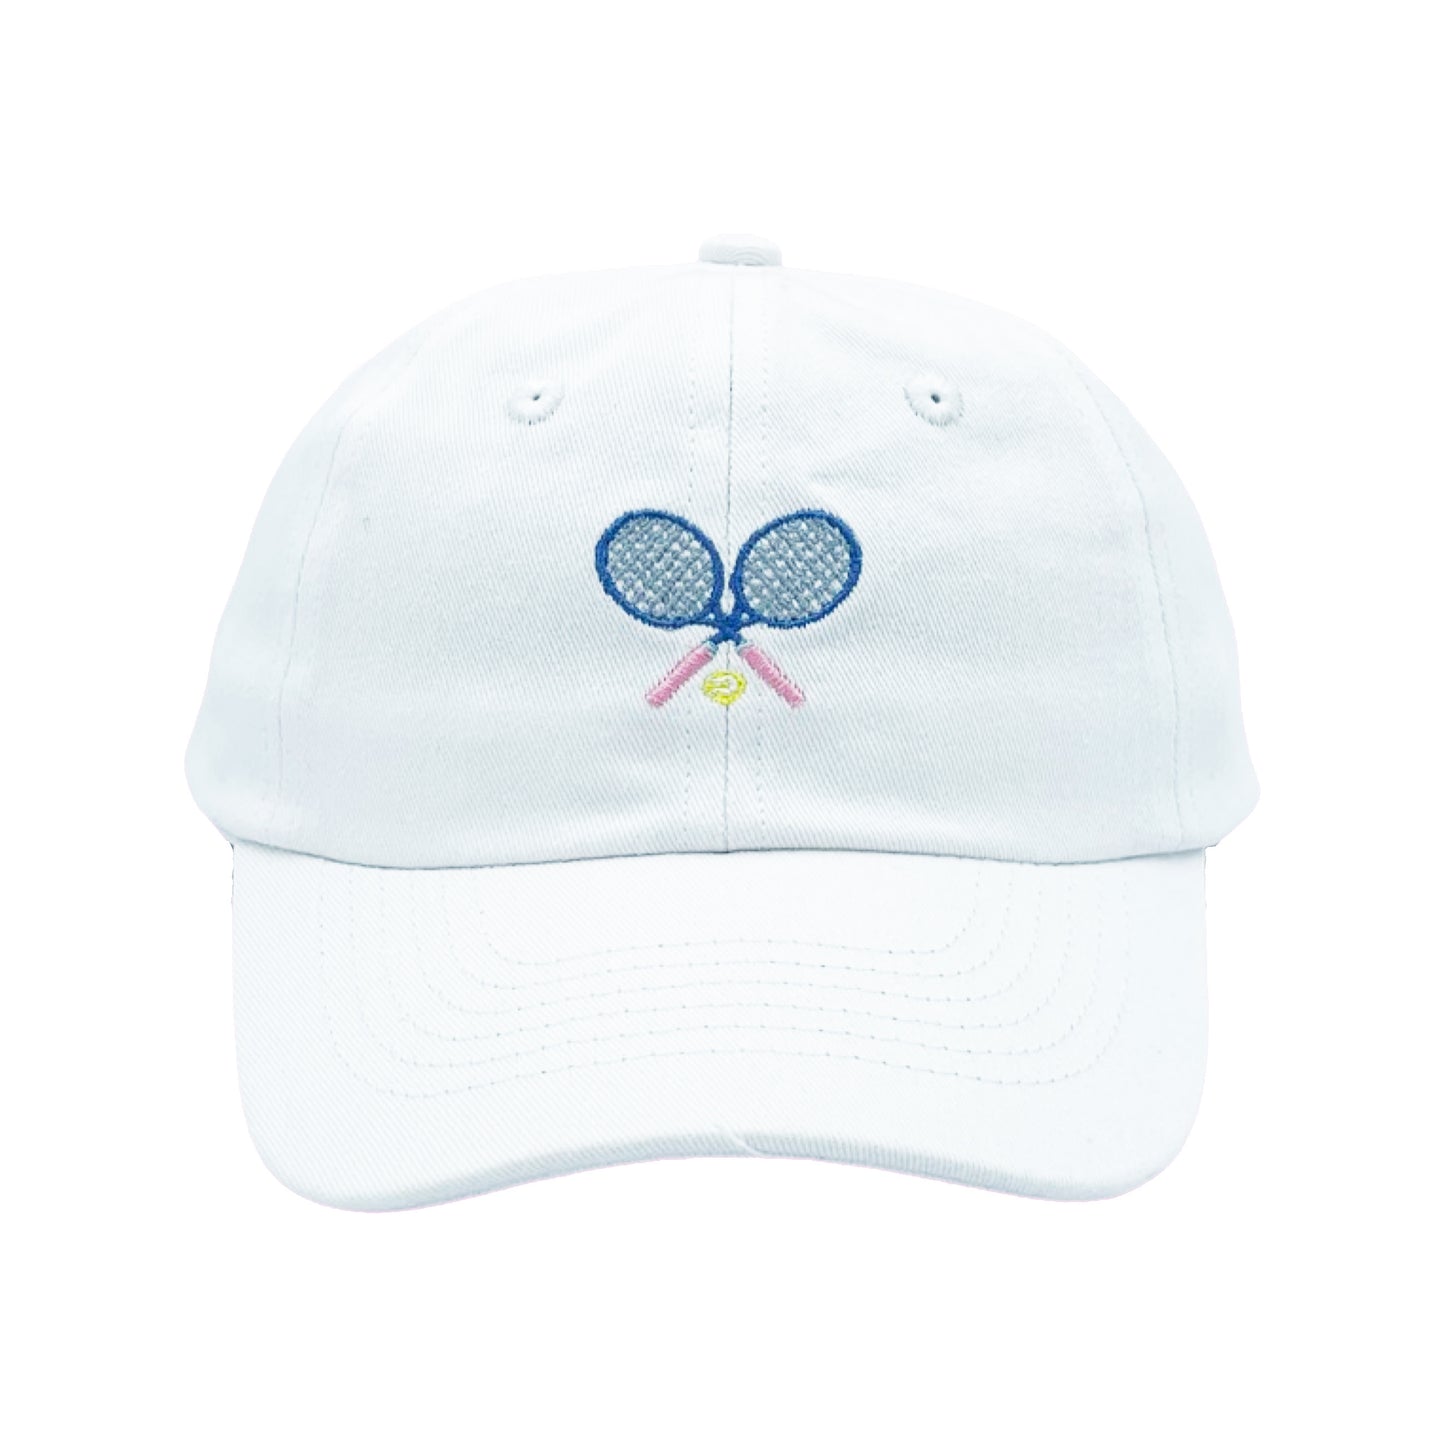 Bits & Bows White Tennis Bow Baseball Hat